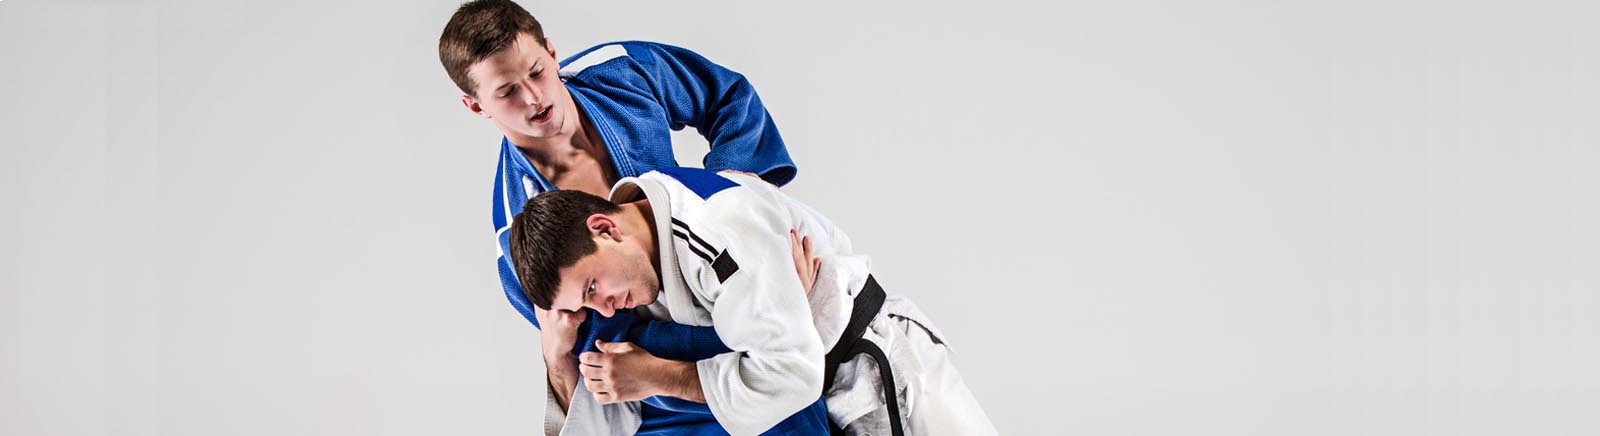 Judo post image